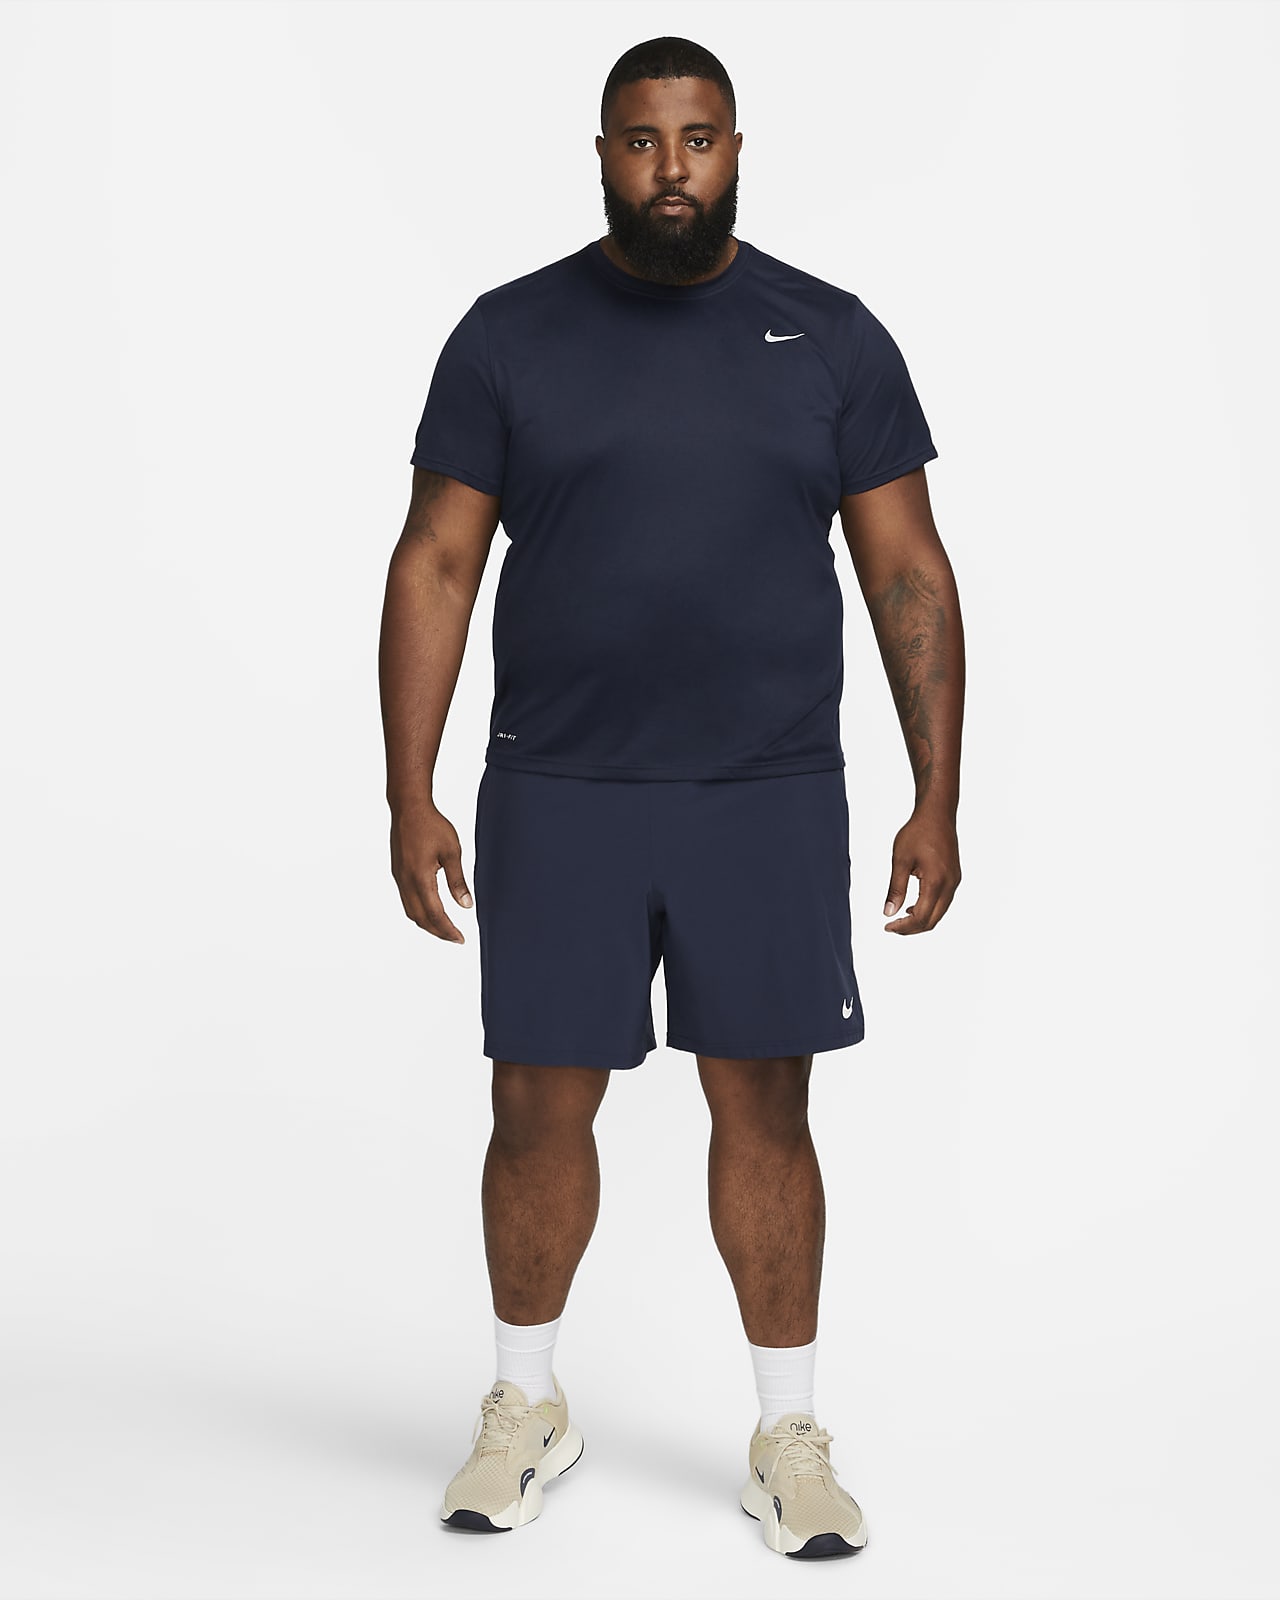 ik ben verdwaald tempo vers Nike Pro Dri-FIT Flex Vent Max Men's 8" Training Shorts. Nike.com